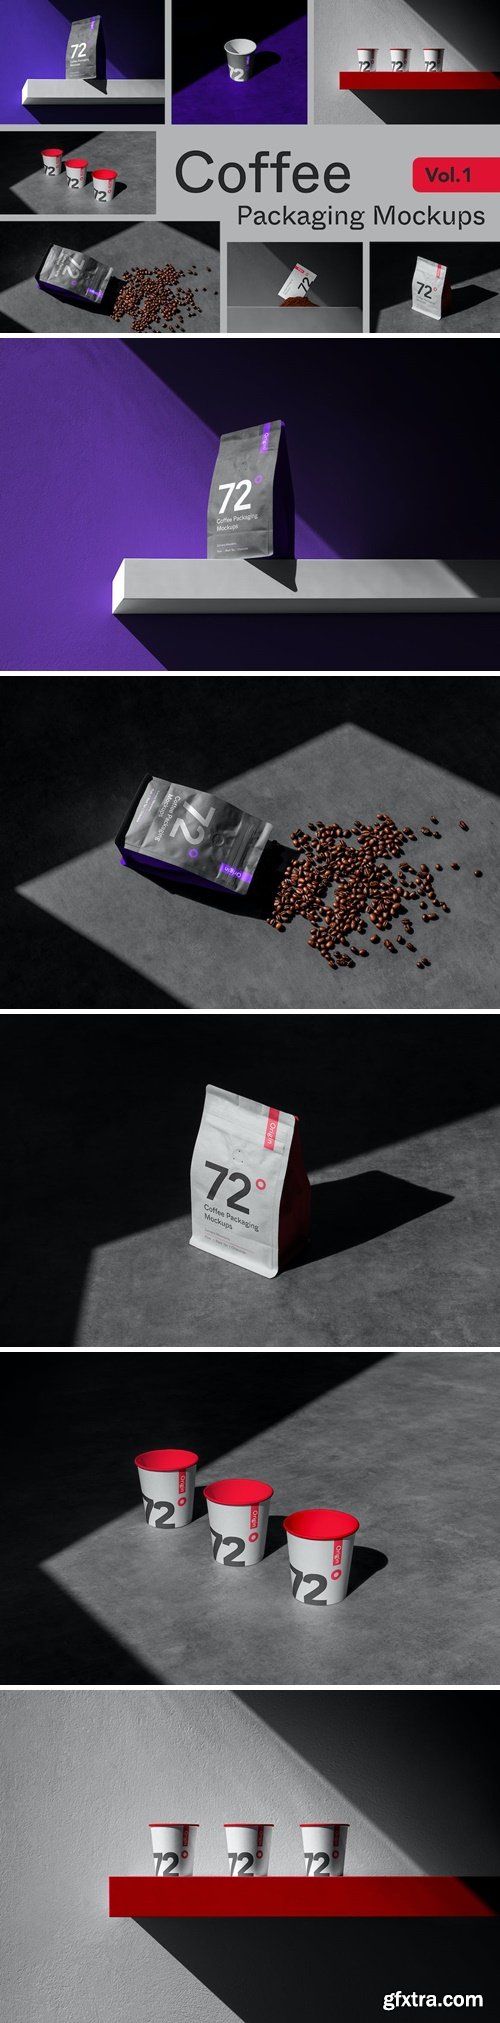 Origin Coffee Packaging Mockups Vol. 1 FQXZYCL